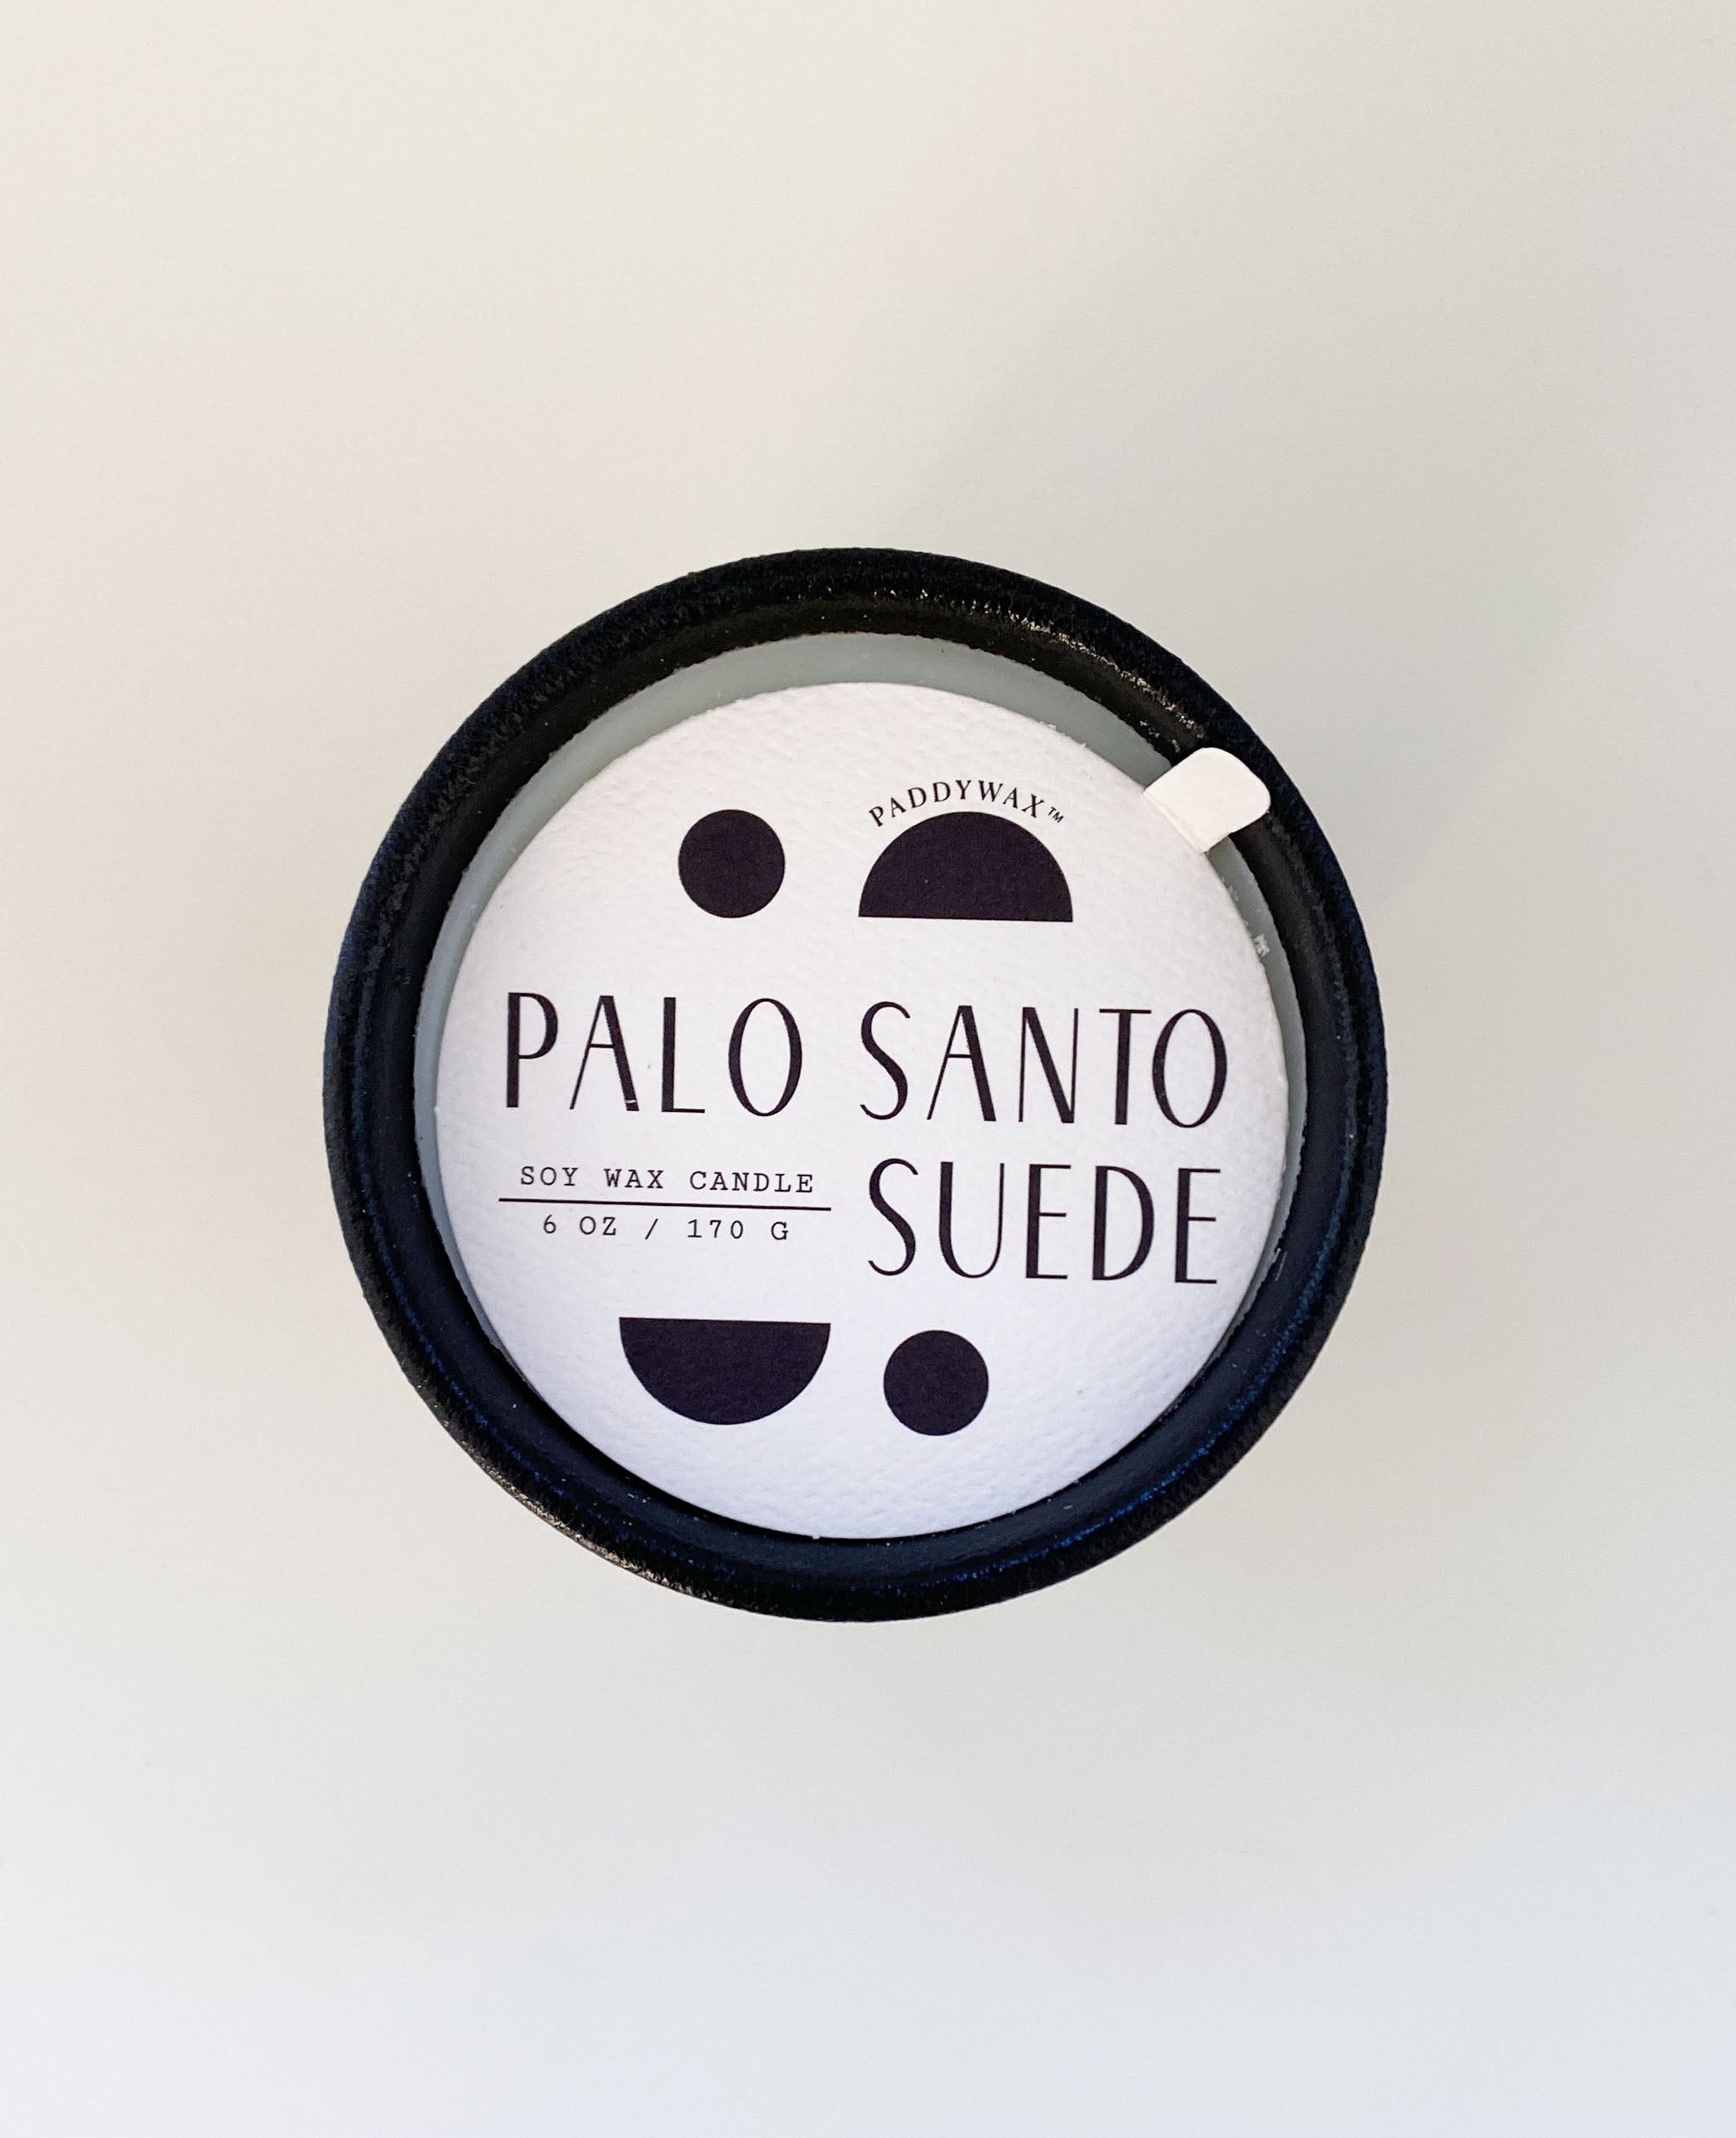 Hourglass Candle - Palo Santo Suede